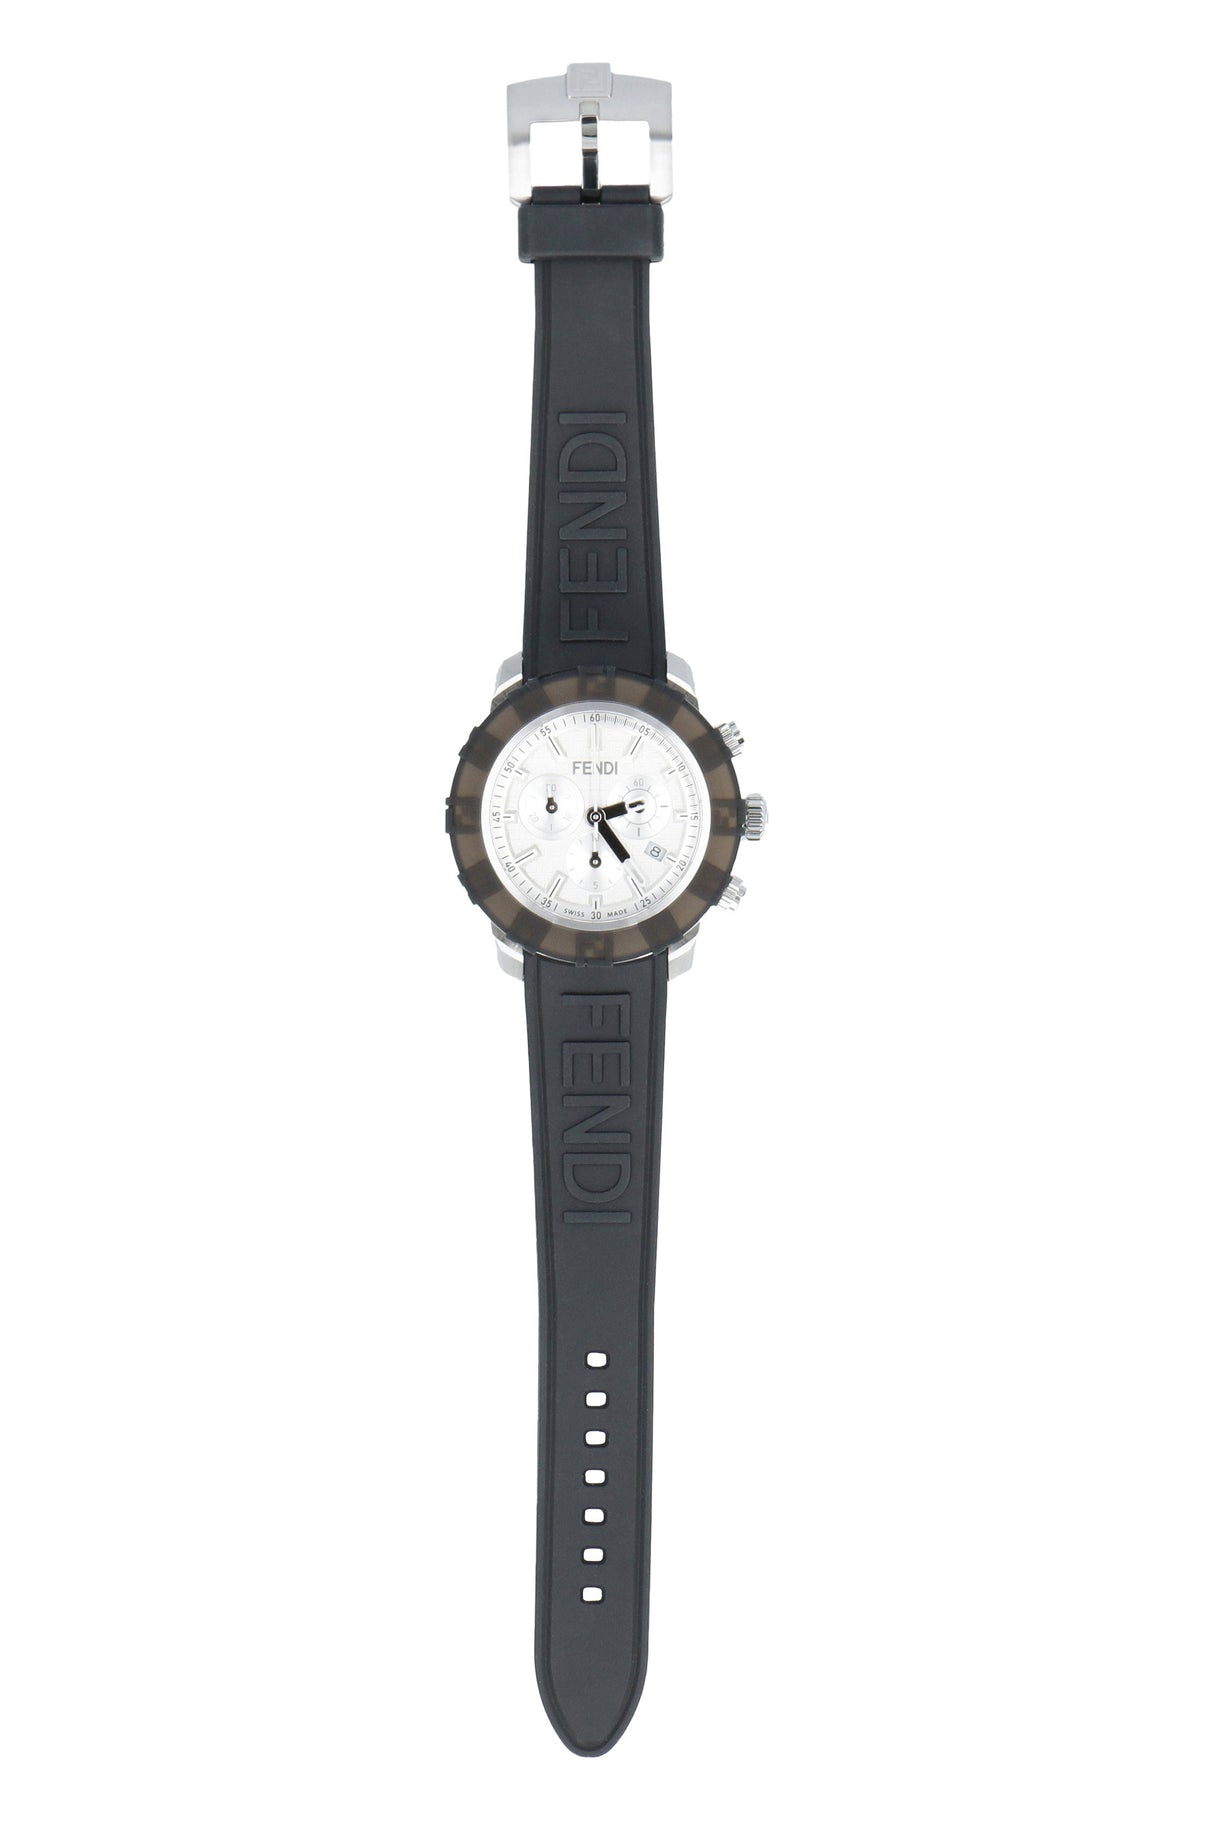 FENDI Stylish Black Wristwatch for Women - FW23 Collection